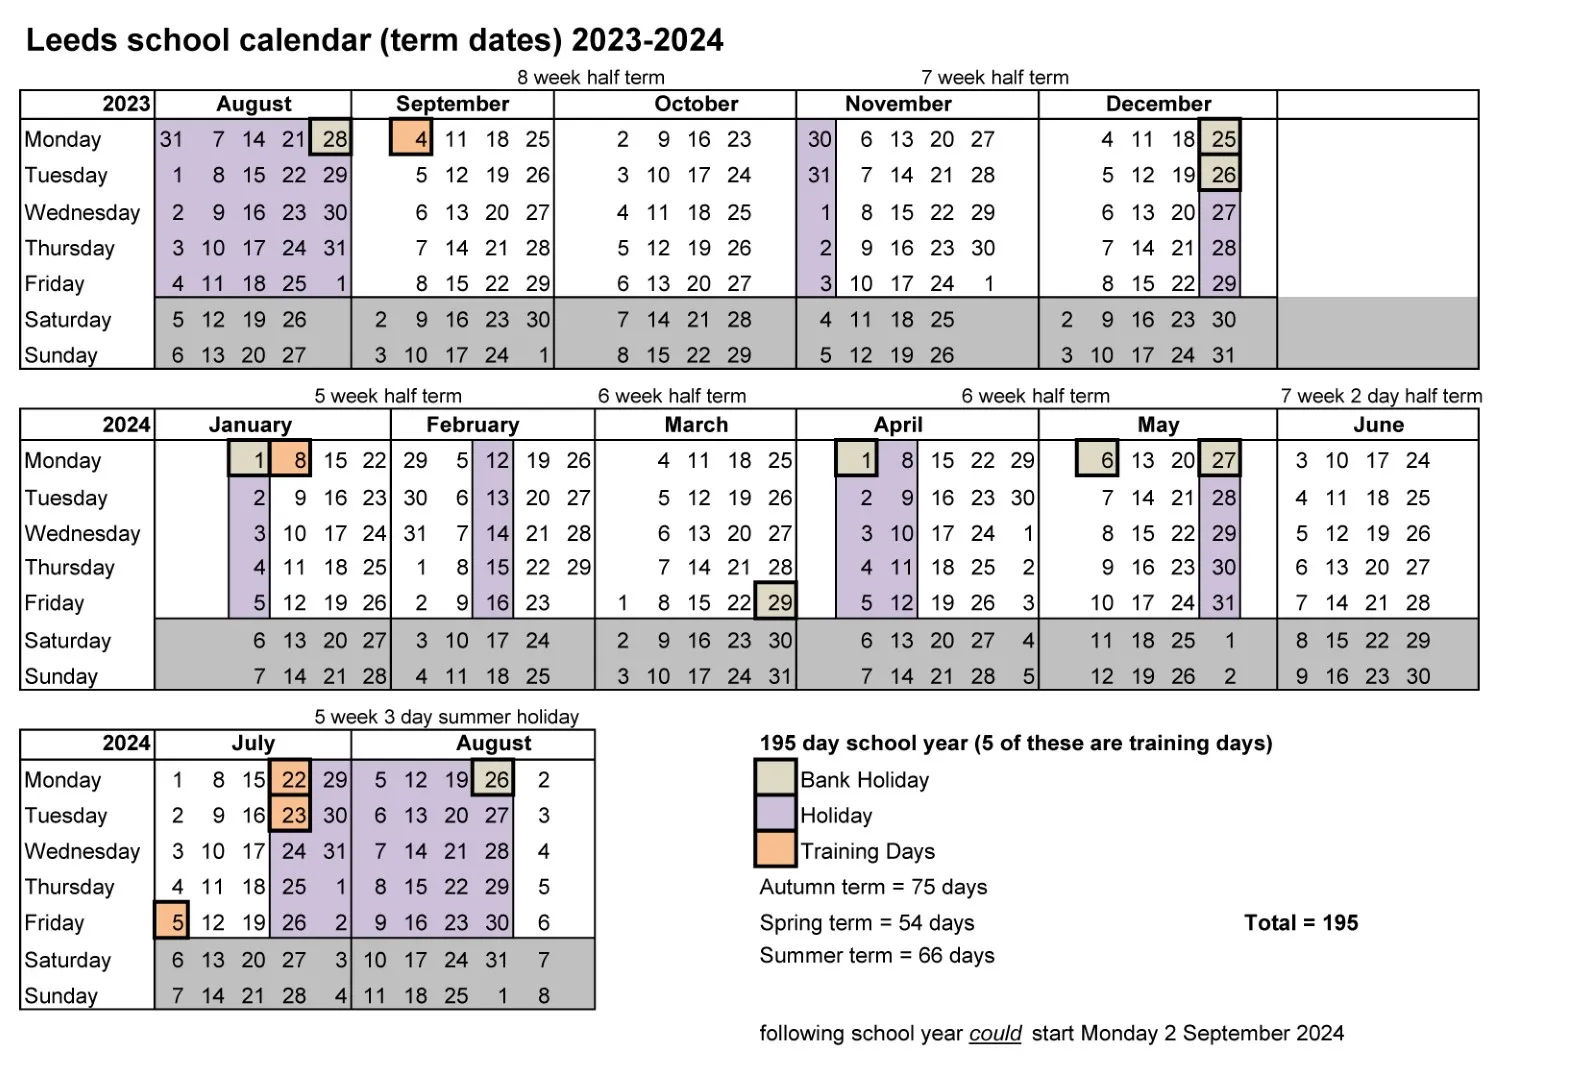 Leeds school calendar 2023-2024 (Custom)